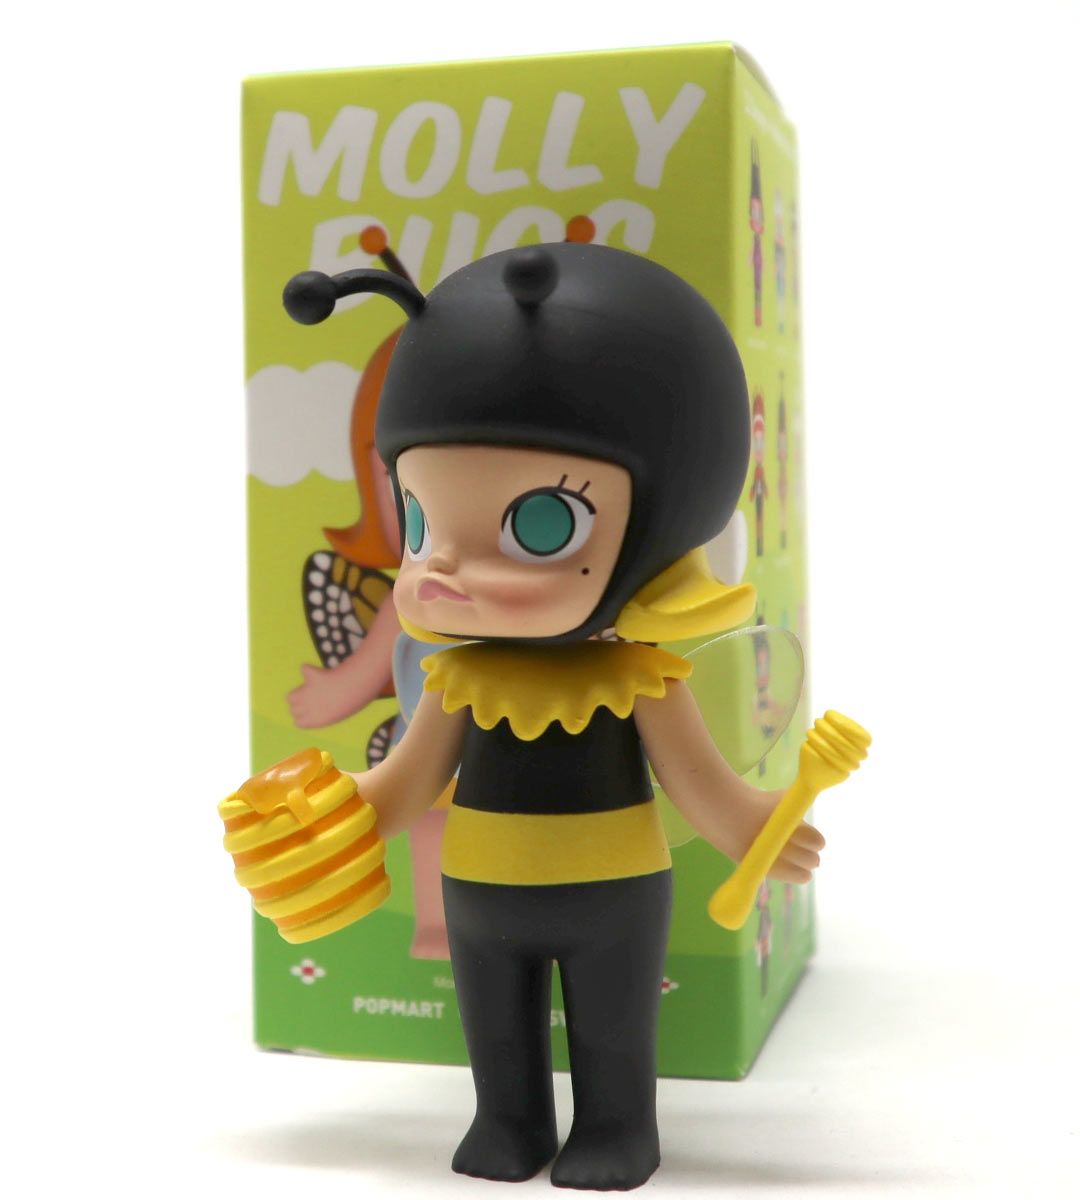 Molly Bugs Series - Kenny Wong